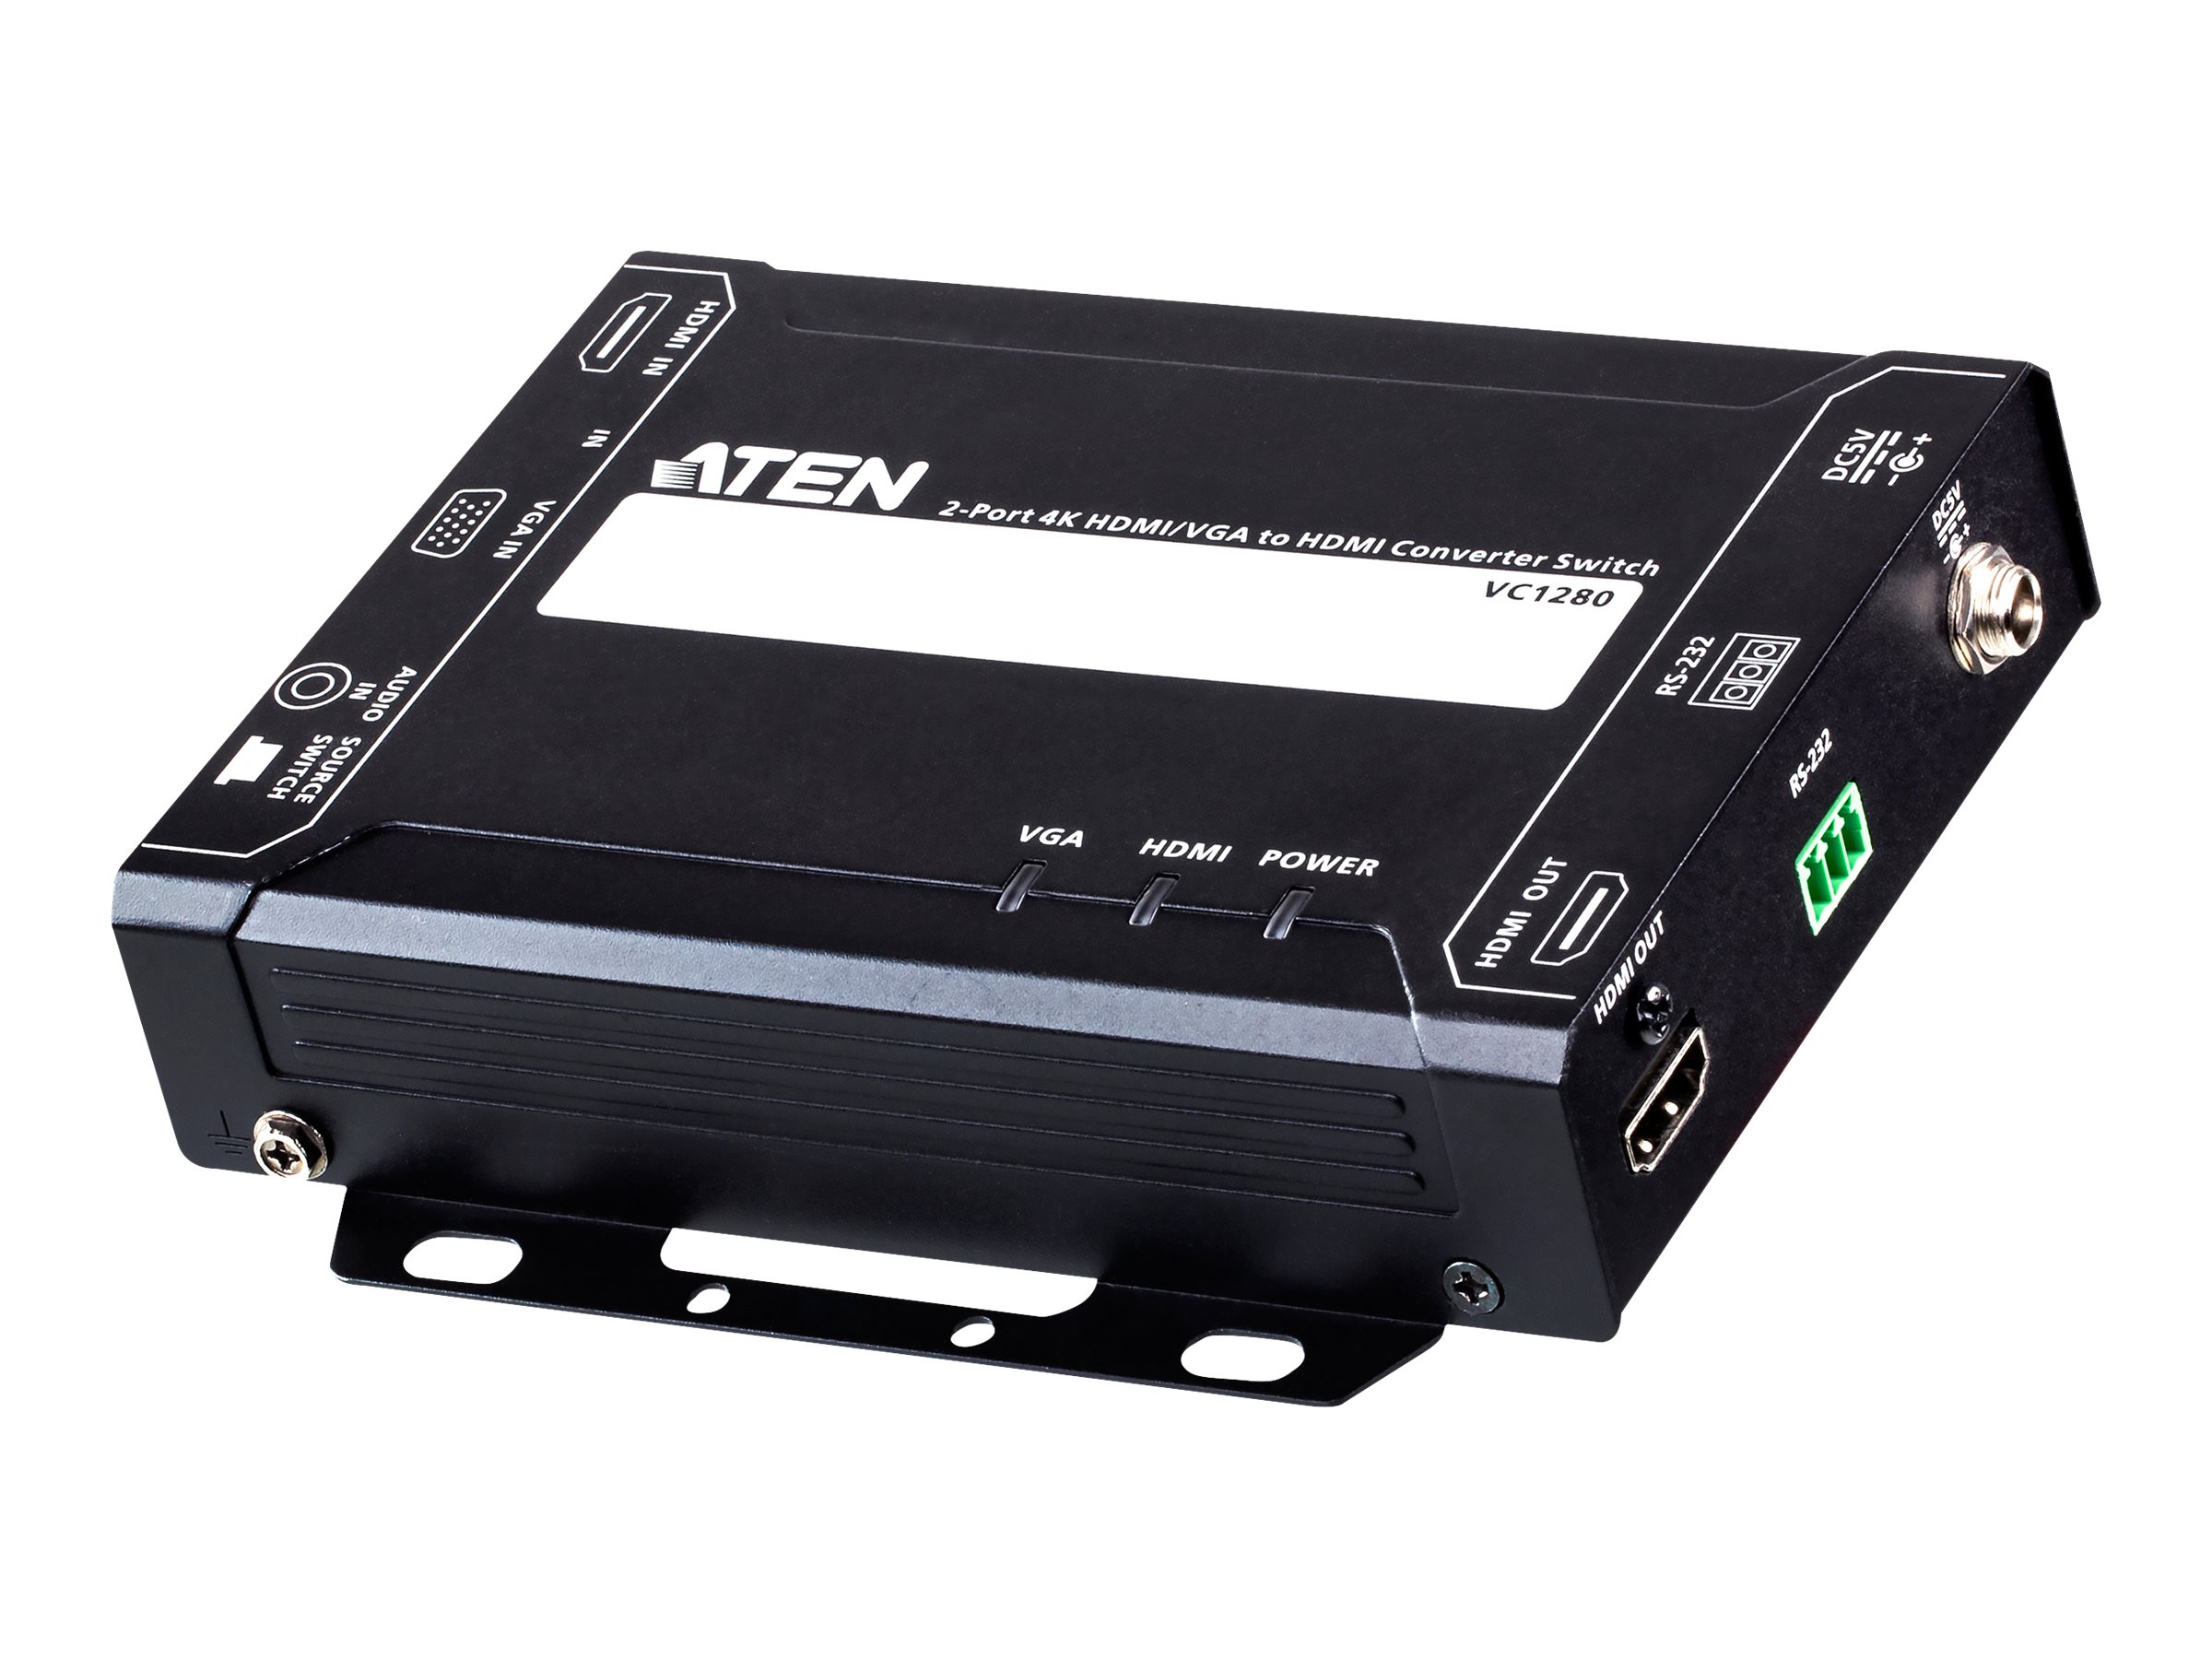 ATEN VC1280 - HDMI / VGA and audio to HDMI switcher/converter